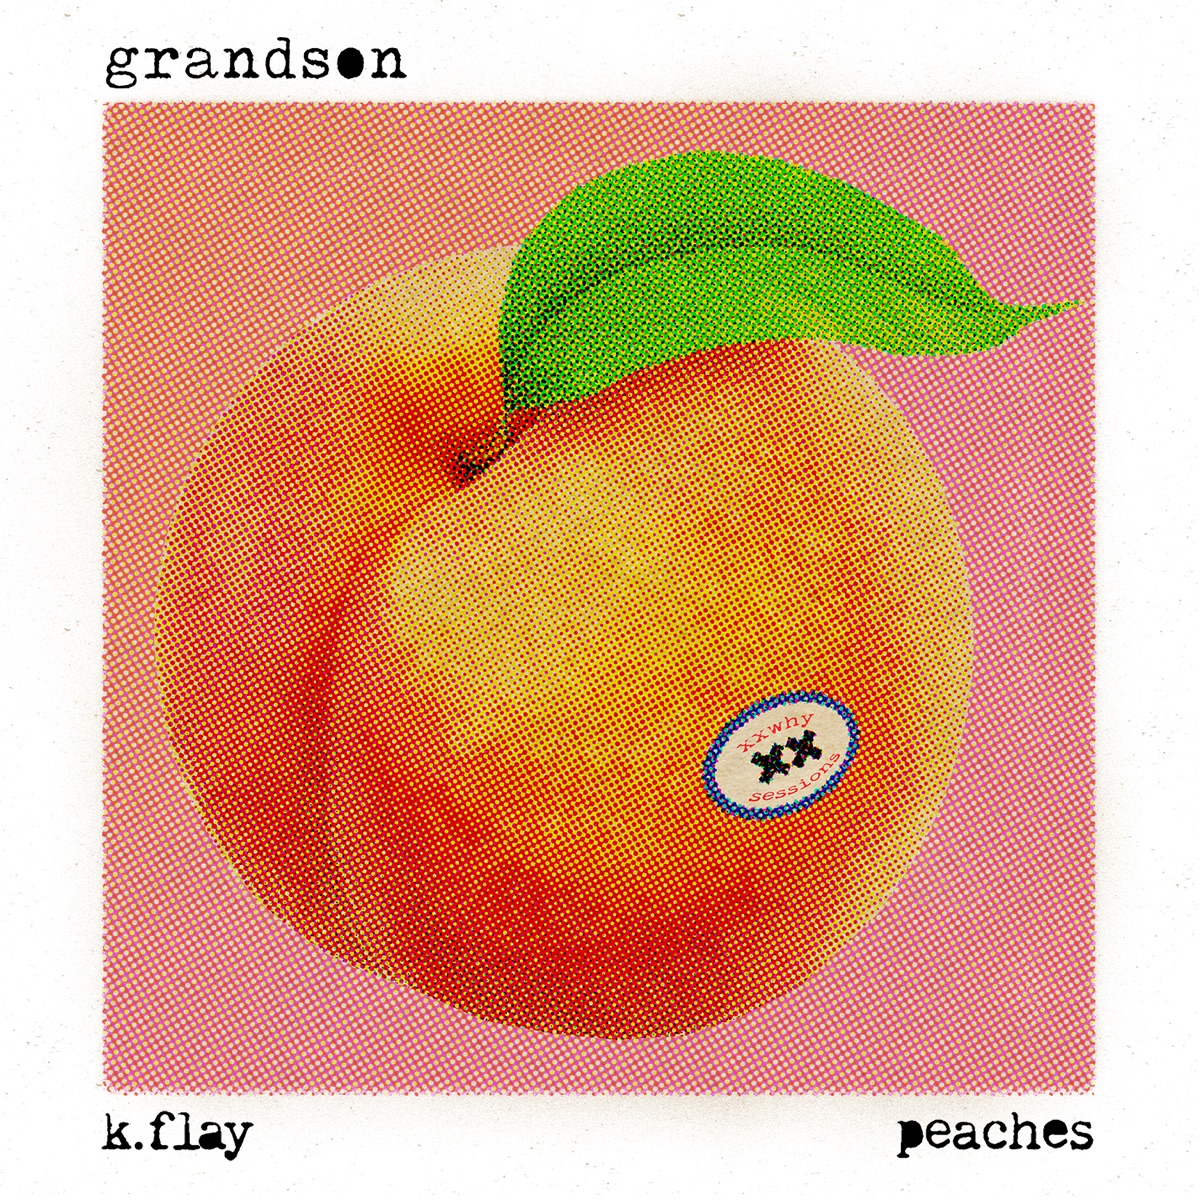 Peaches discography - Wikipedia